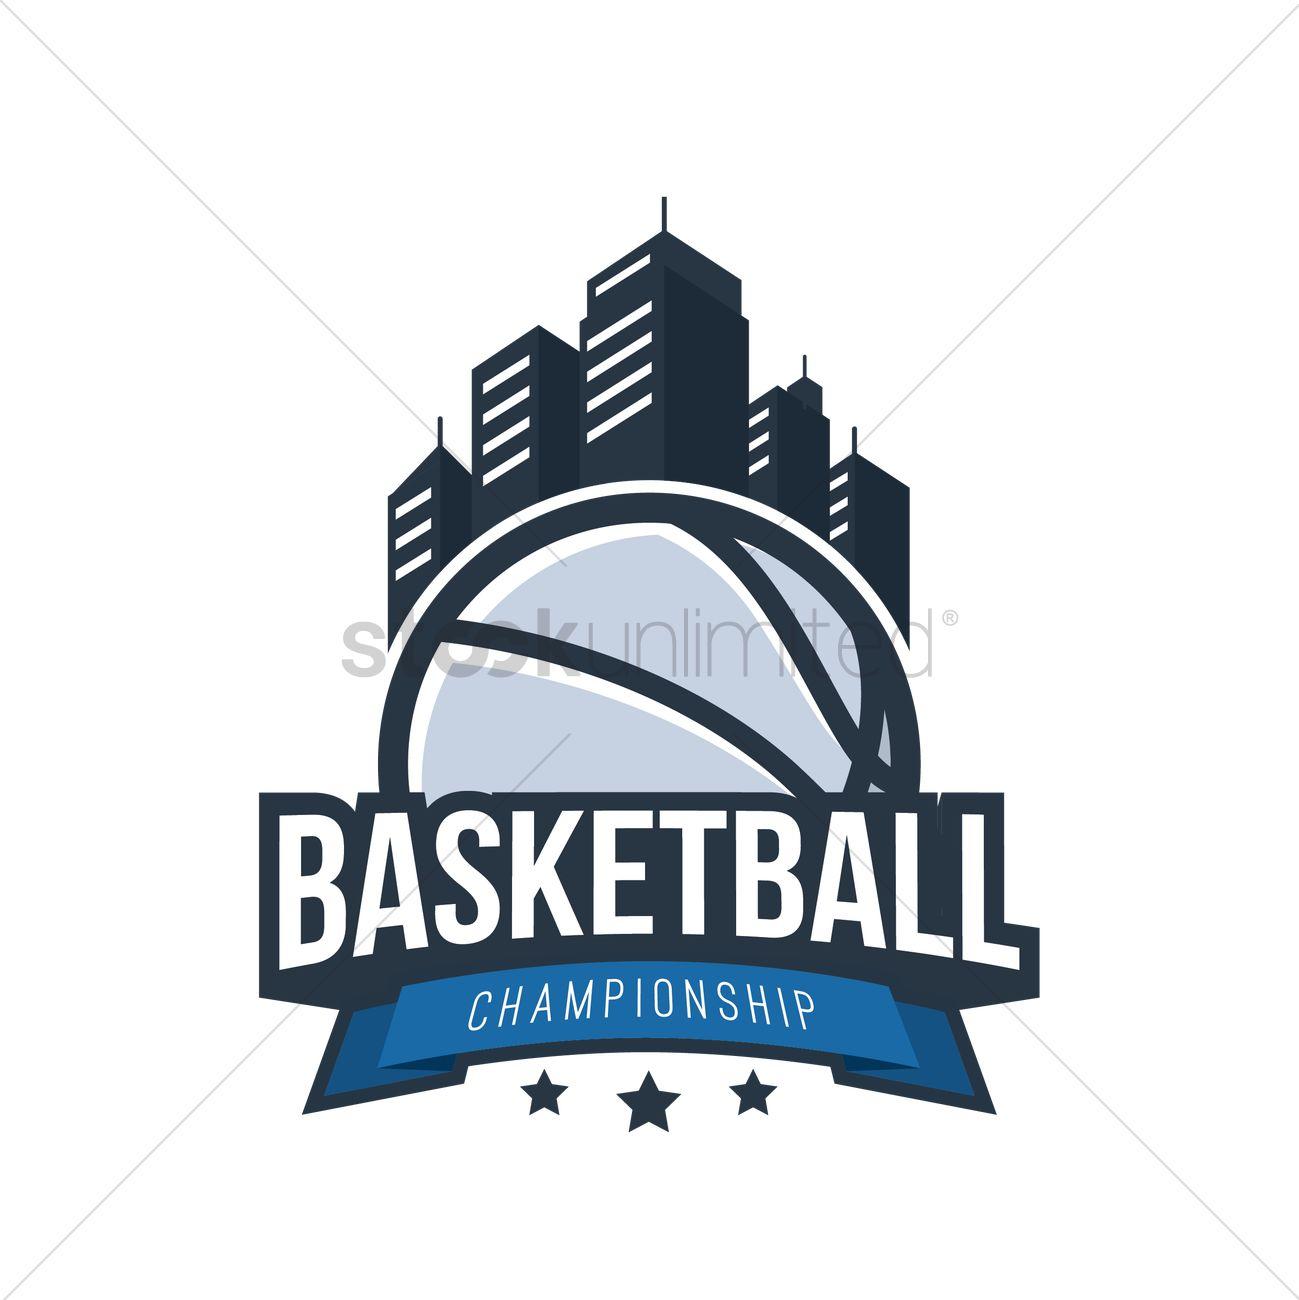 Creative Basketball Logo - Basketball logo element design Vector Image - 2008767 | StockUnlimited